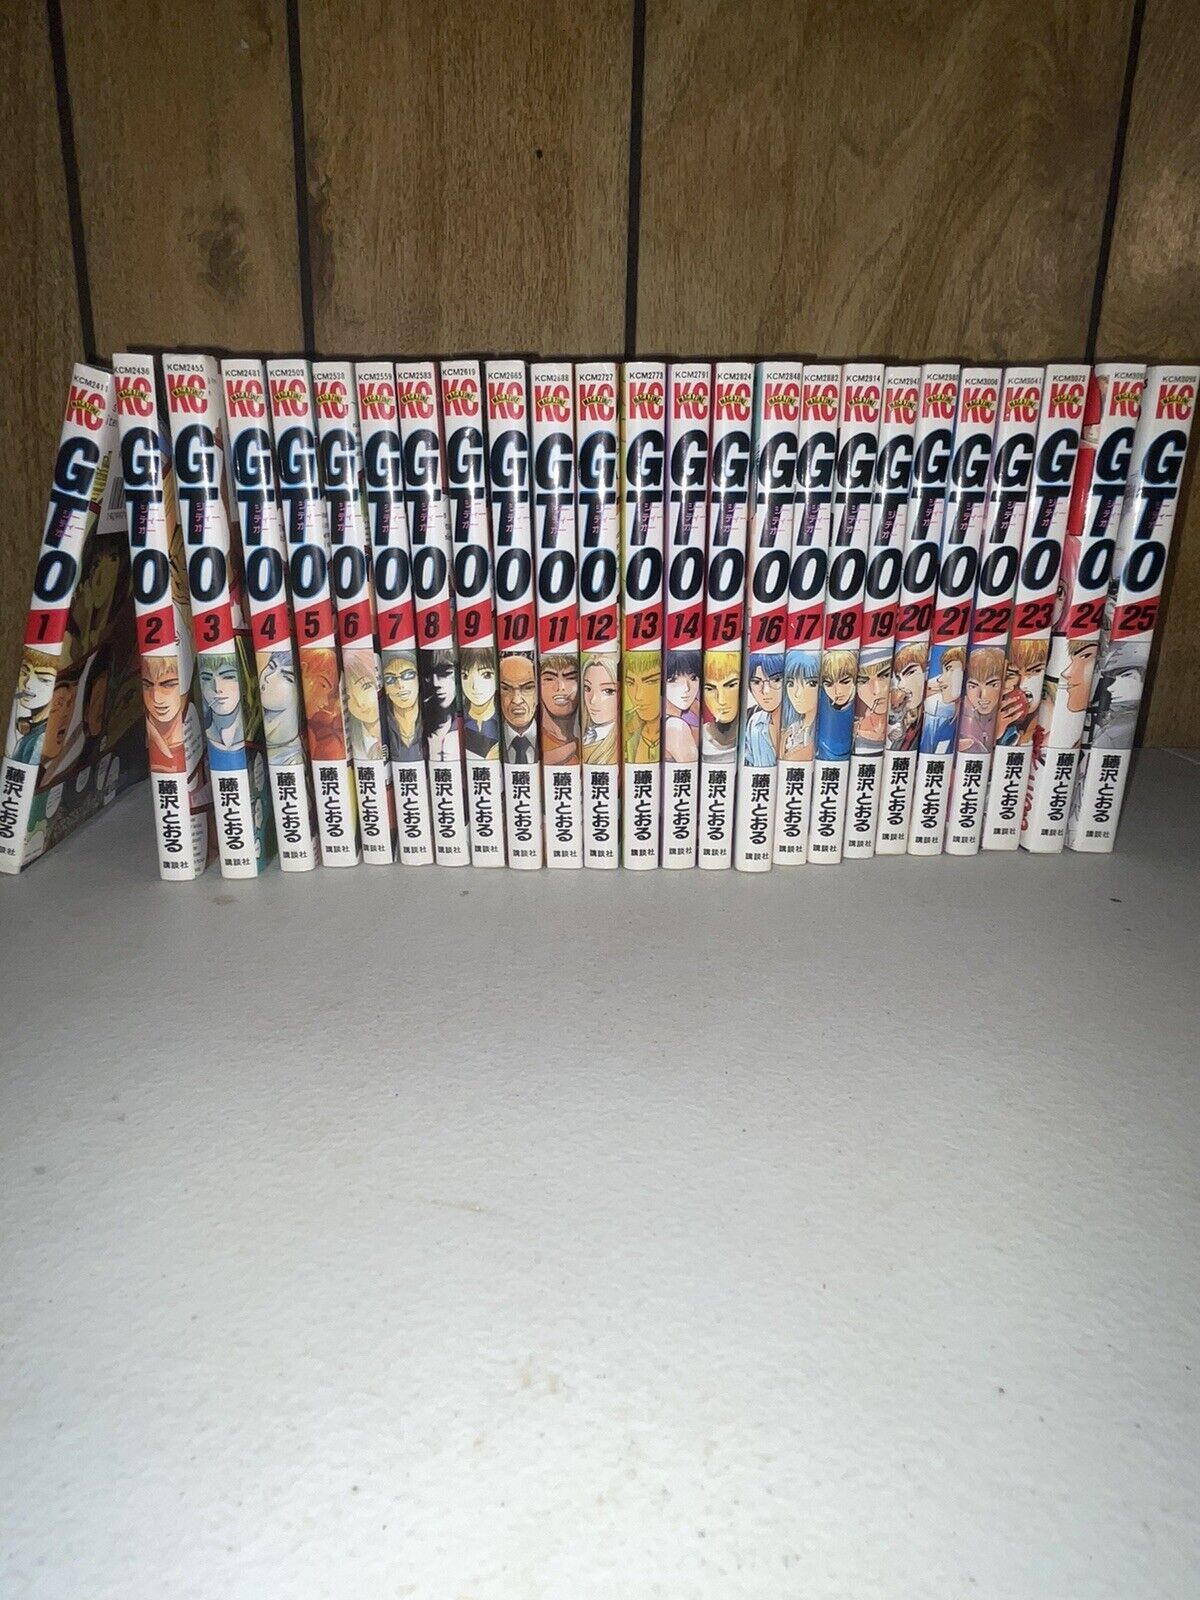 GTO Great Teacher Onizuka Vol.1-25 Japanese language Complete set Manga Comics